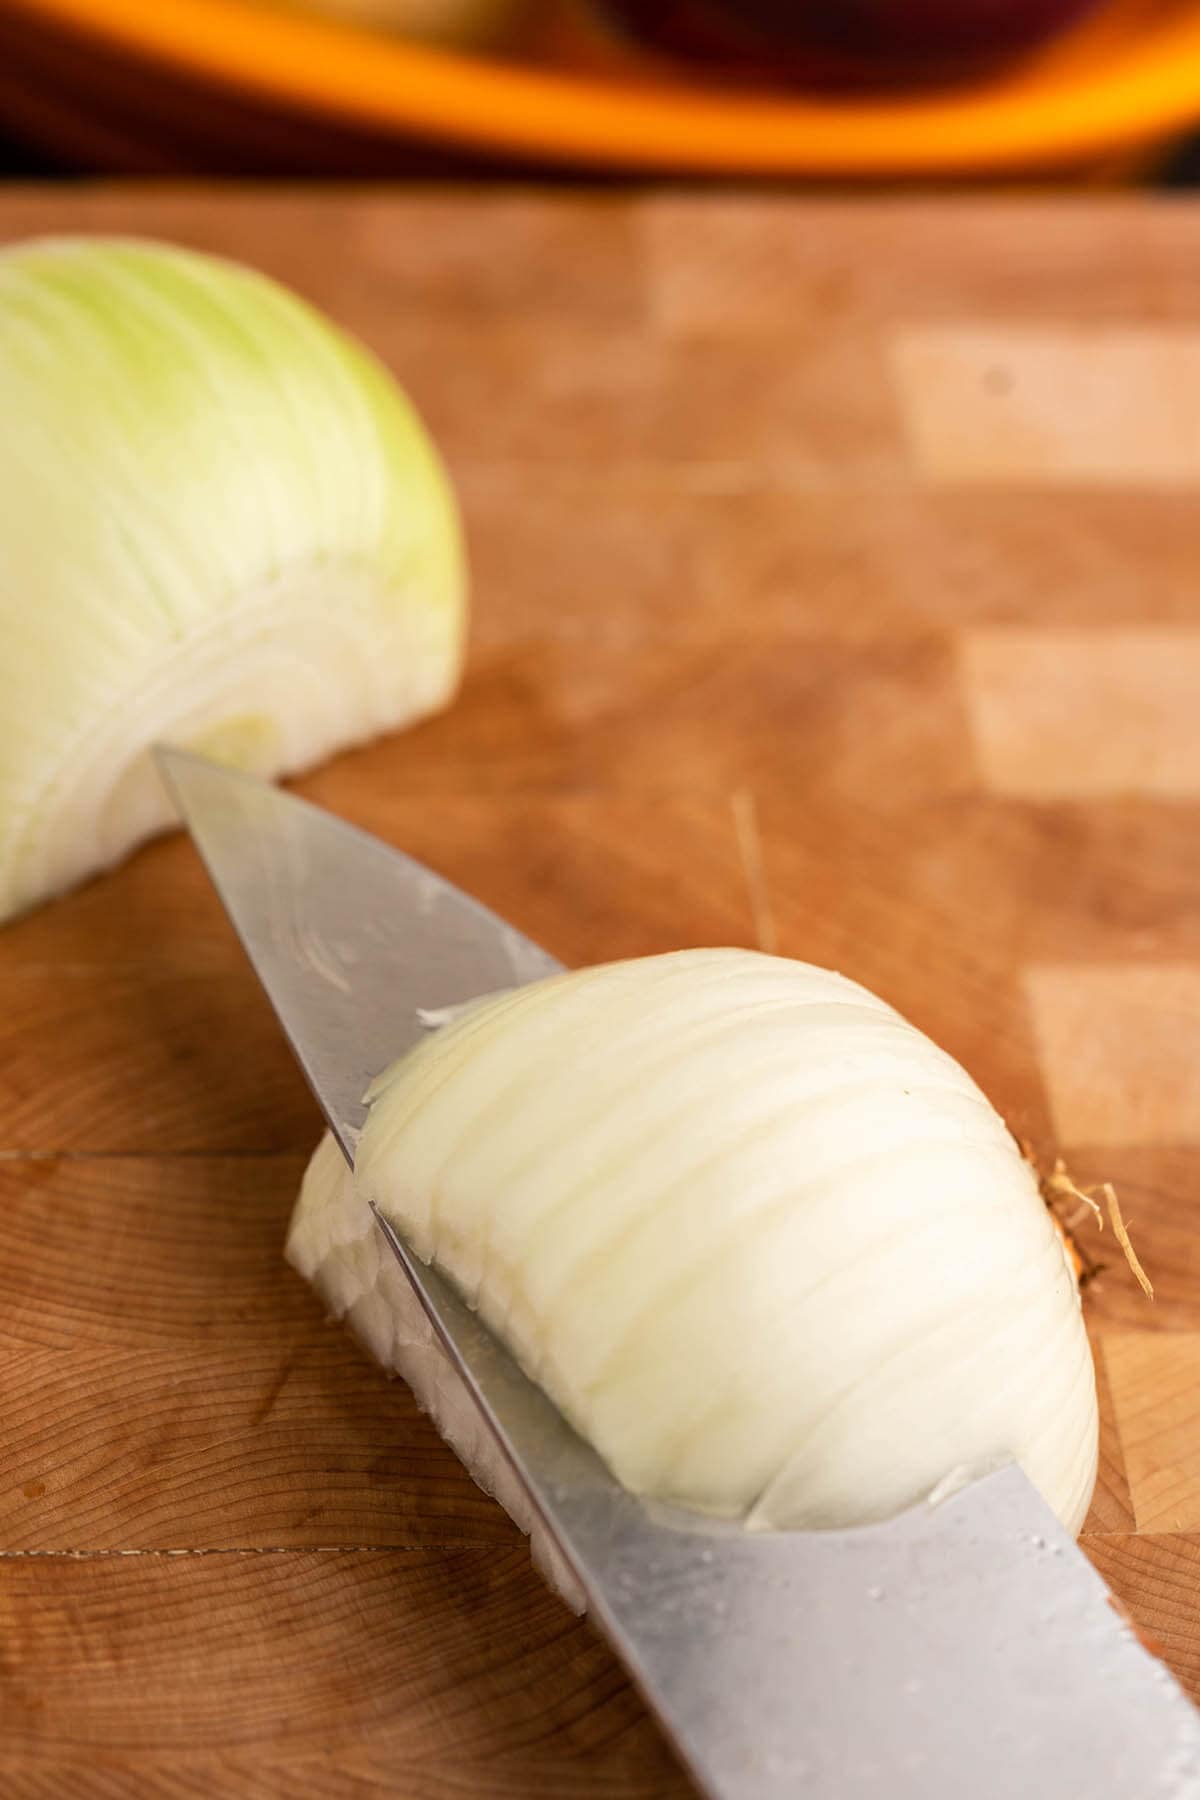 Knife making horizontal in onion.